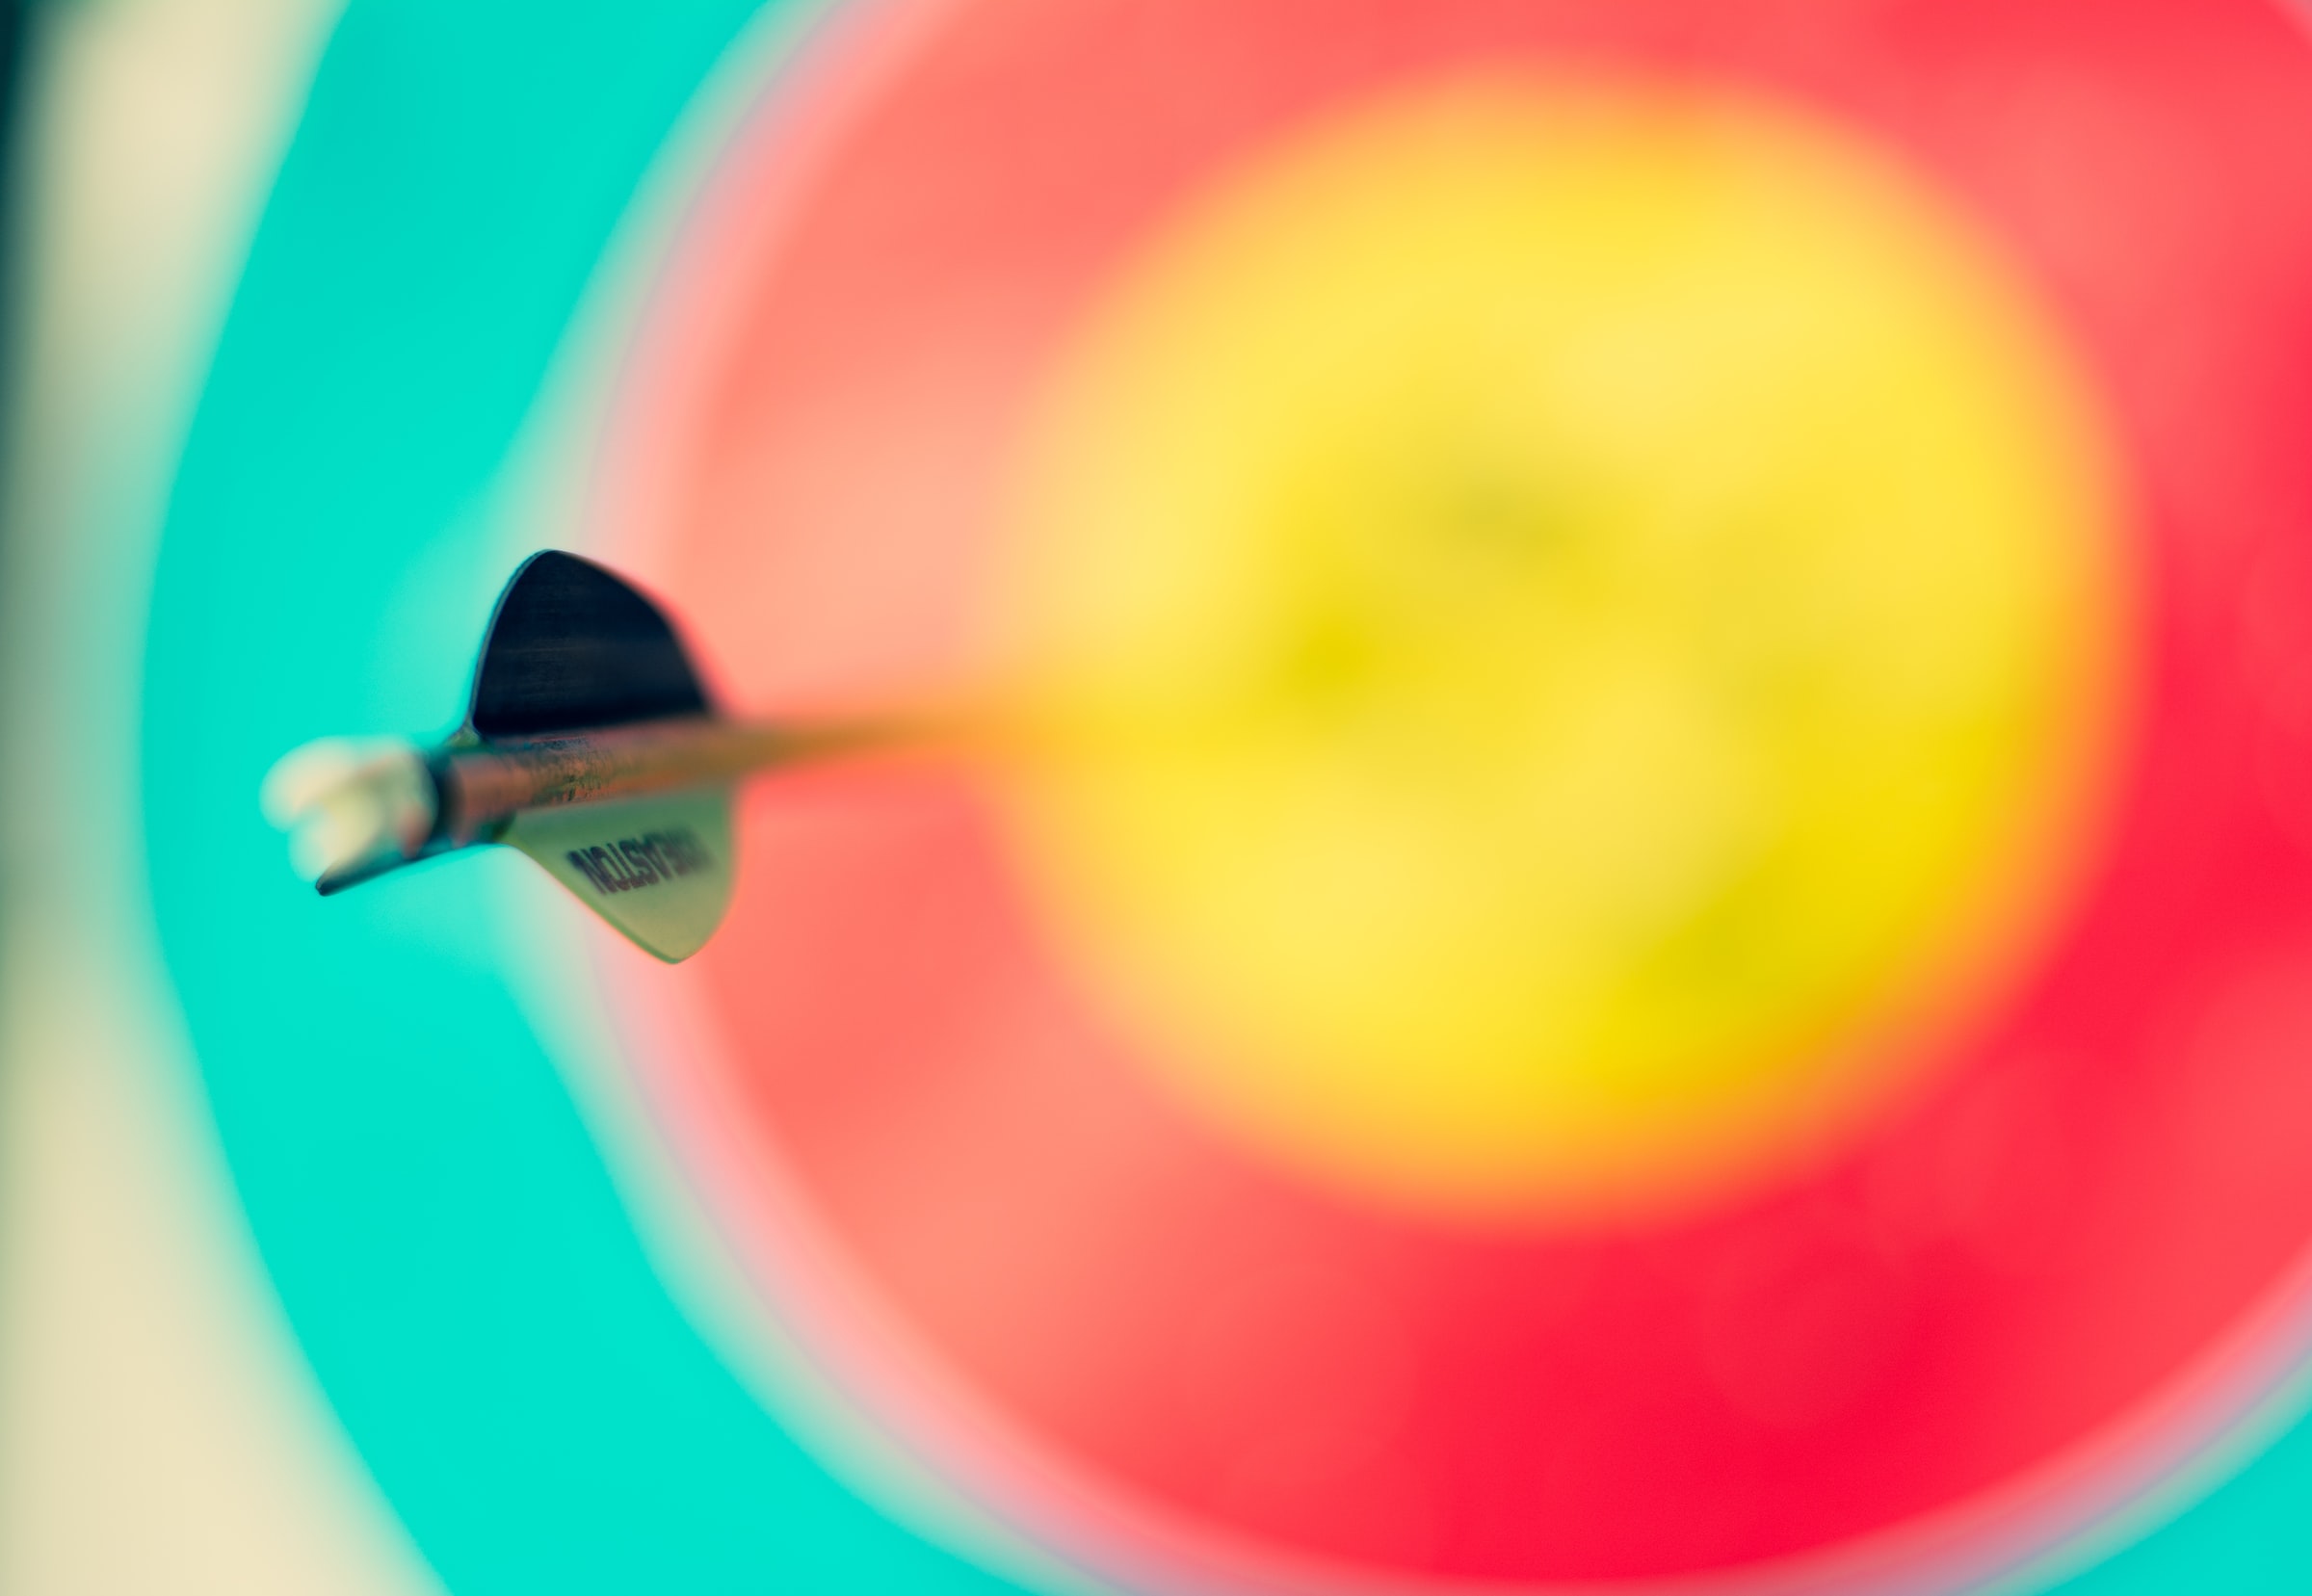 Photograph of an arrow hitting the target